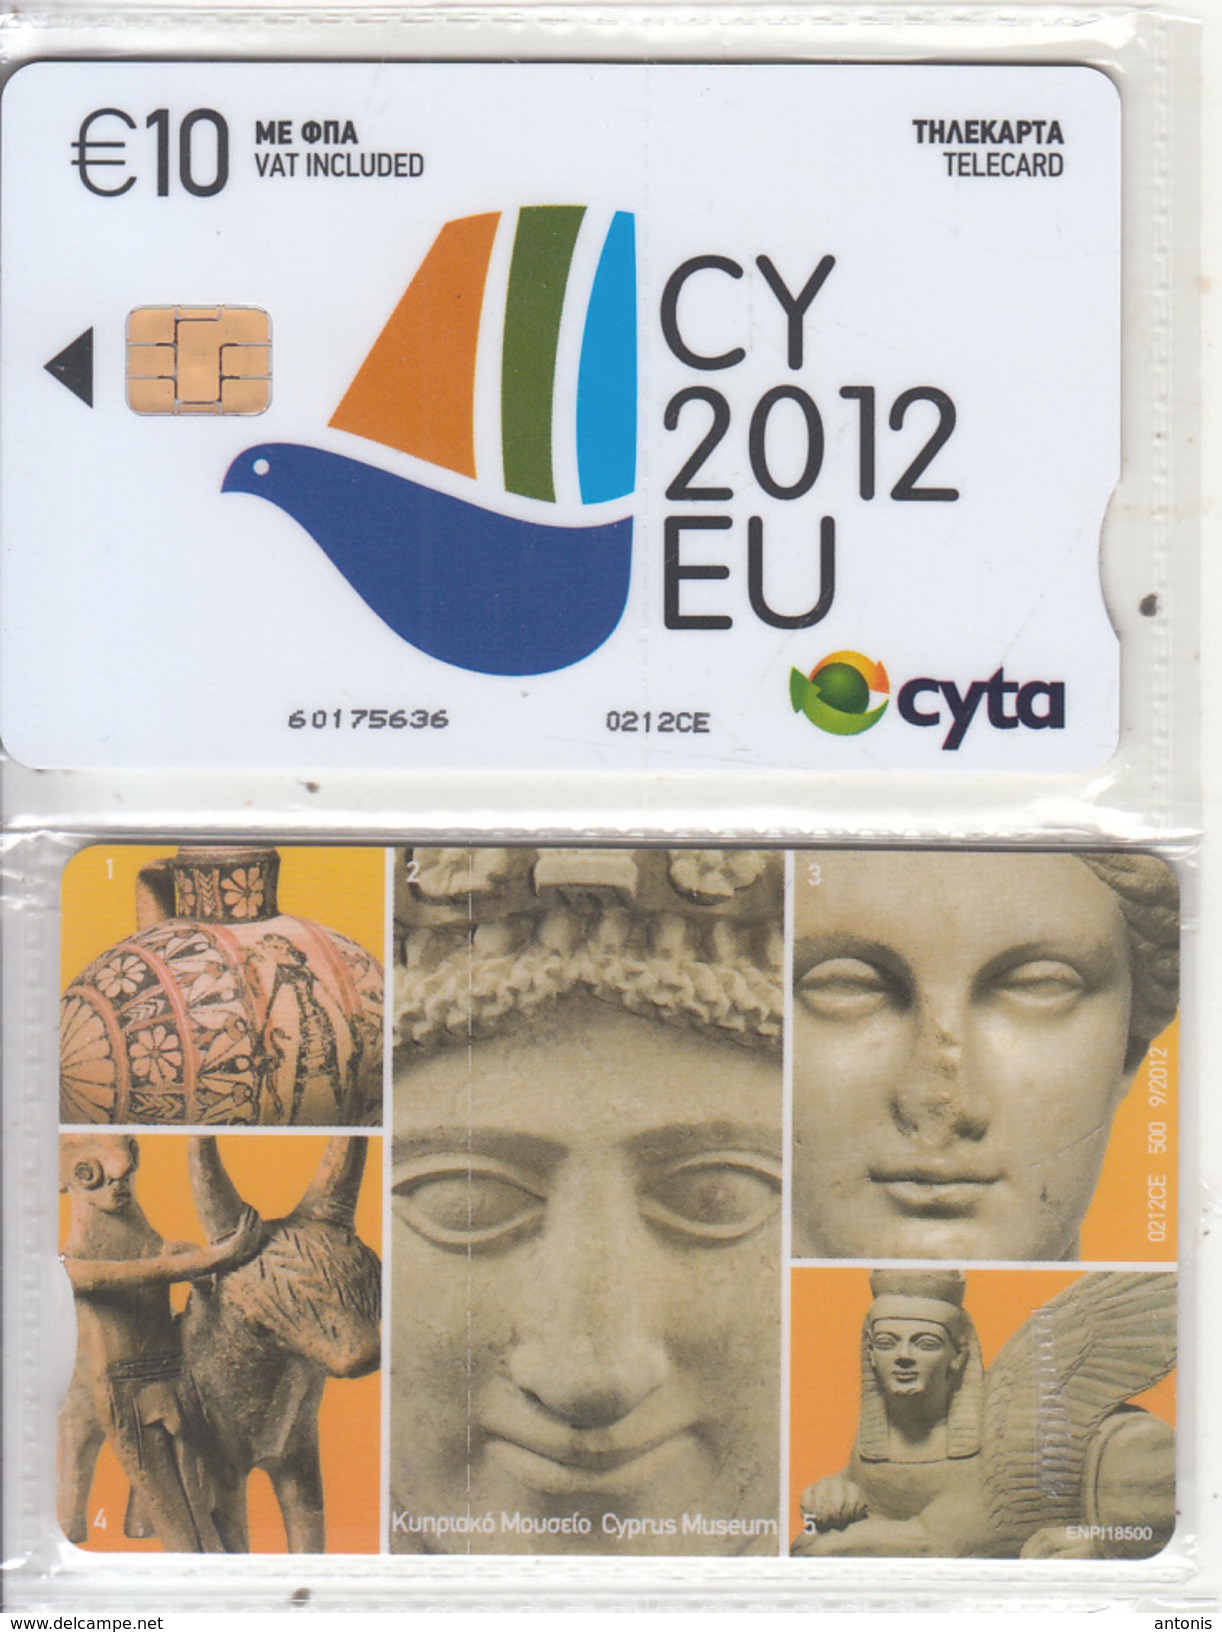 CYPRUS - CY 2012 EU(10 Euro), Collector"s Card No 25, Tirage 500, 09/12, Mint - Cyprus